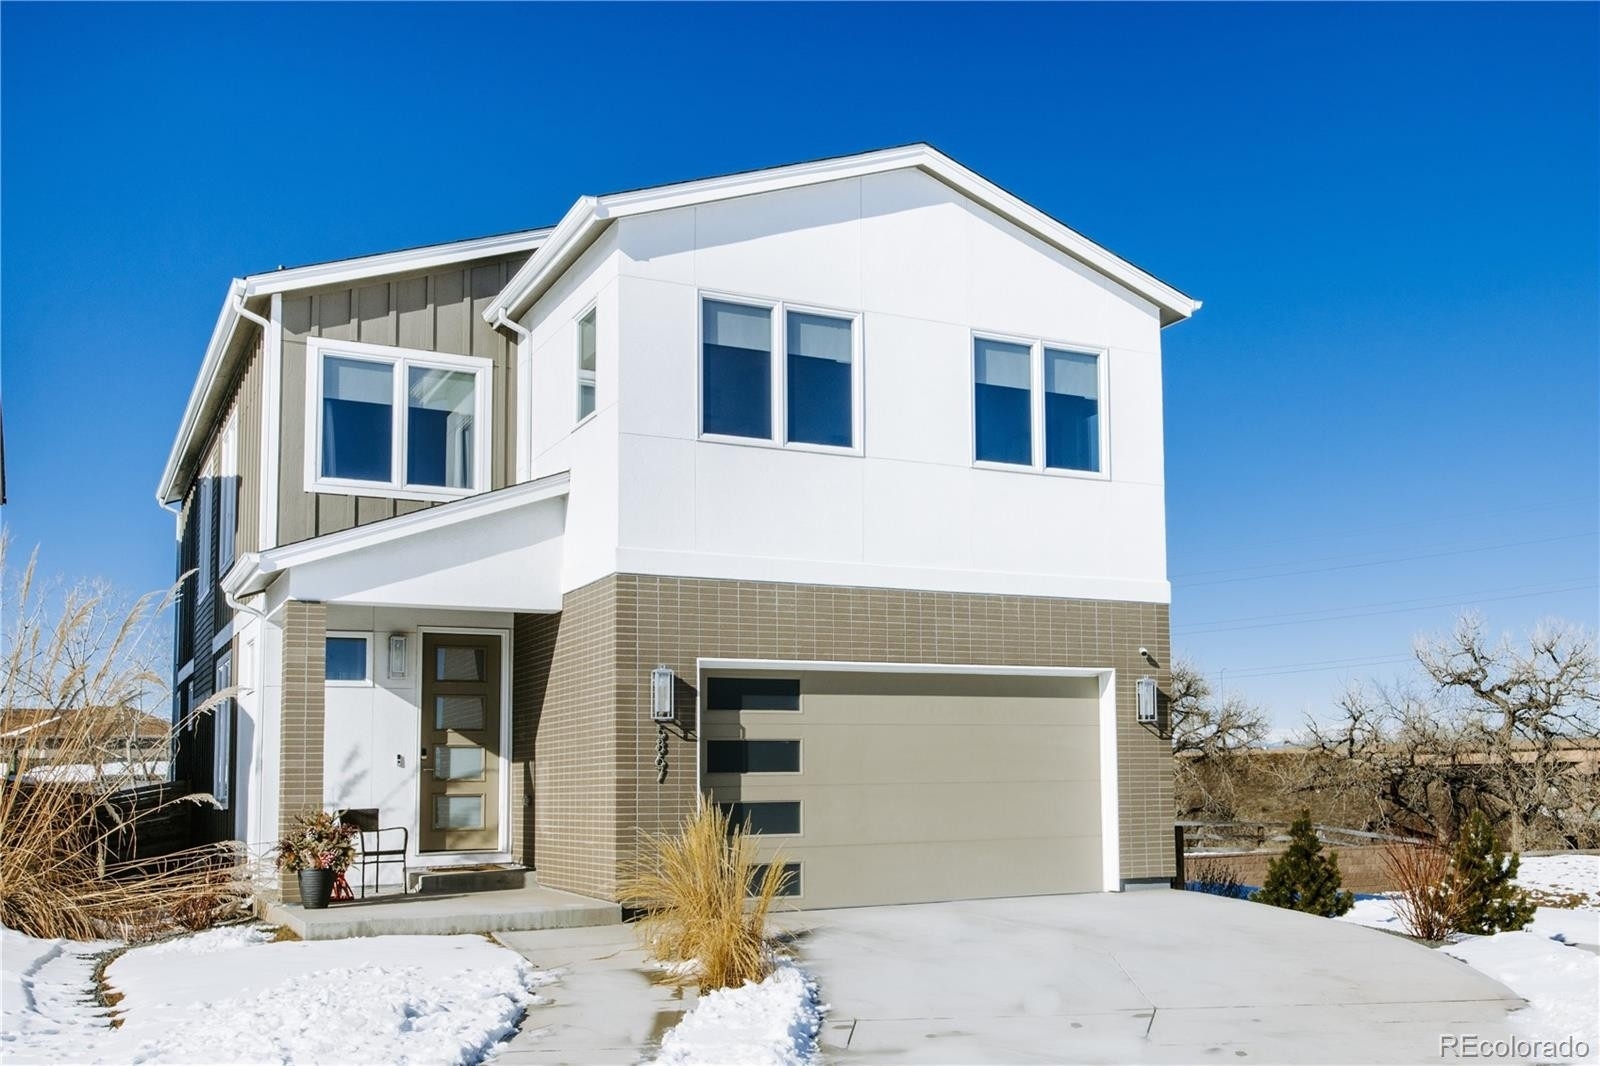 Single Family Home for Sale at Berkley, Denver, Colorado 80221